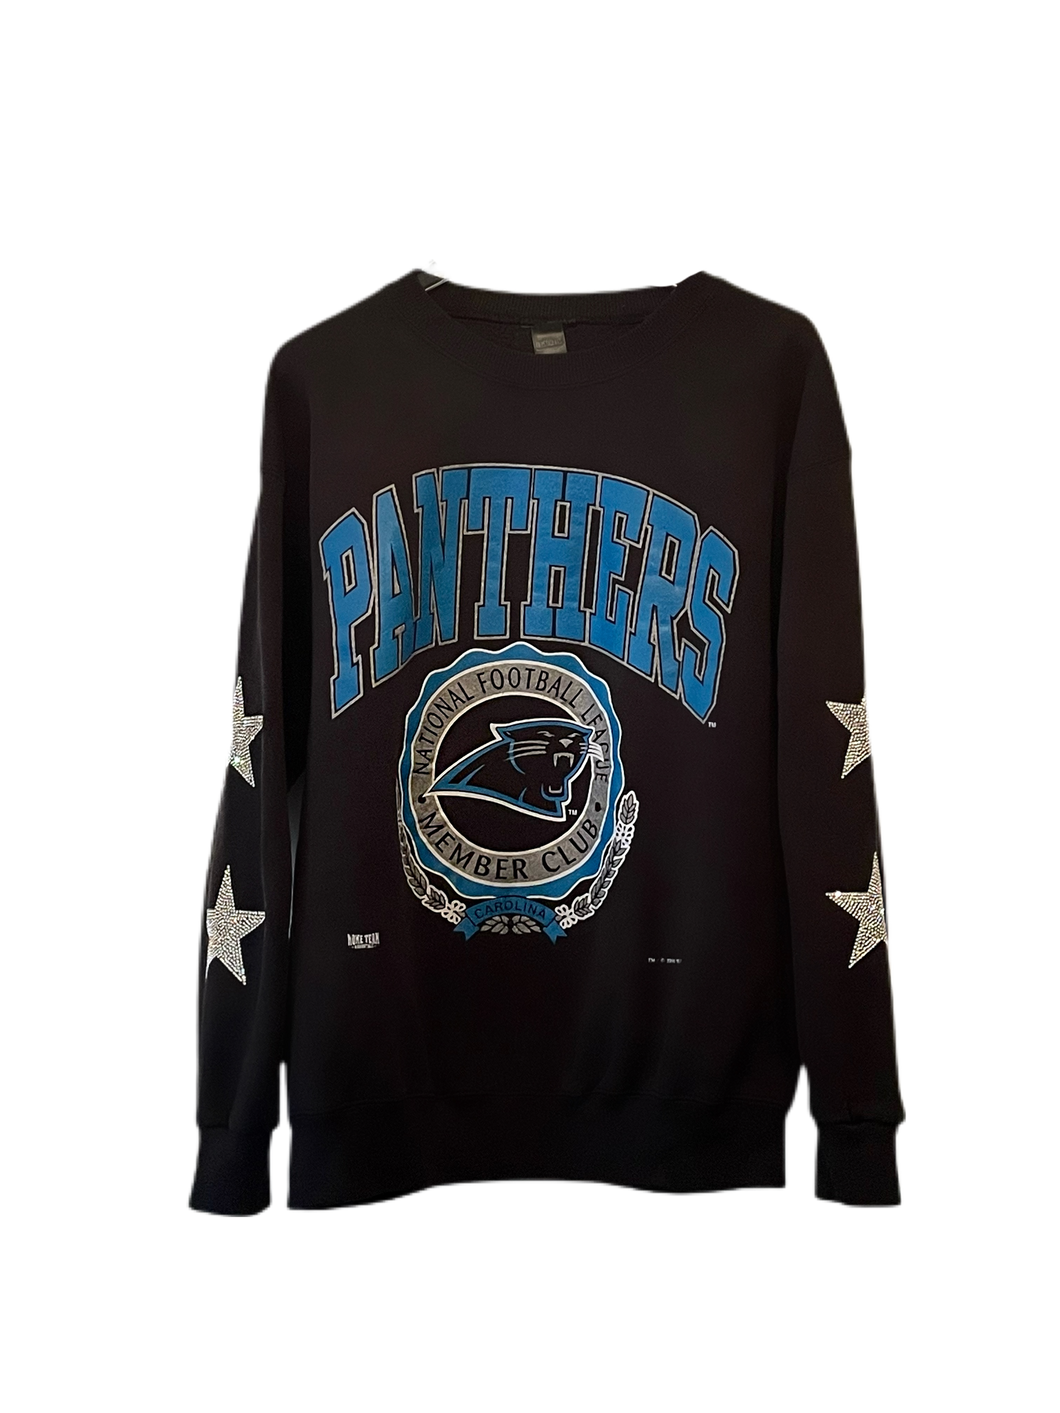 Carolina Panthers, NFL One of a KIND Vintage Sweatshirt with Crystal Star Design